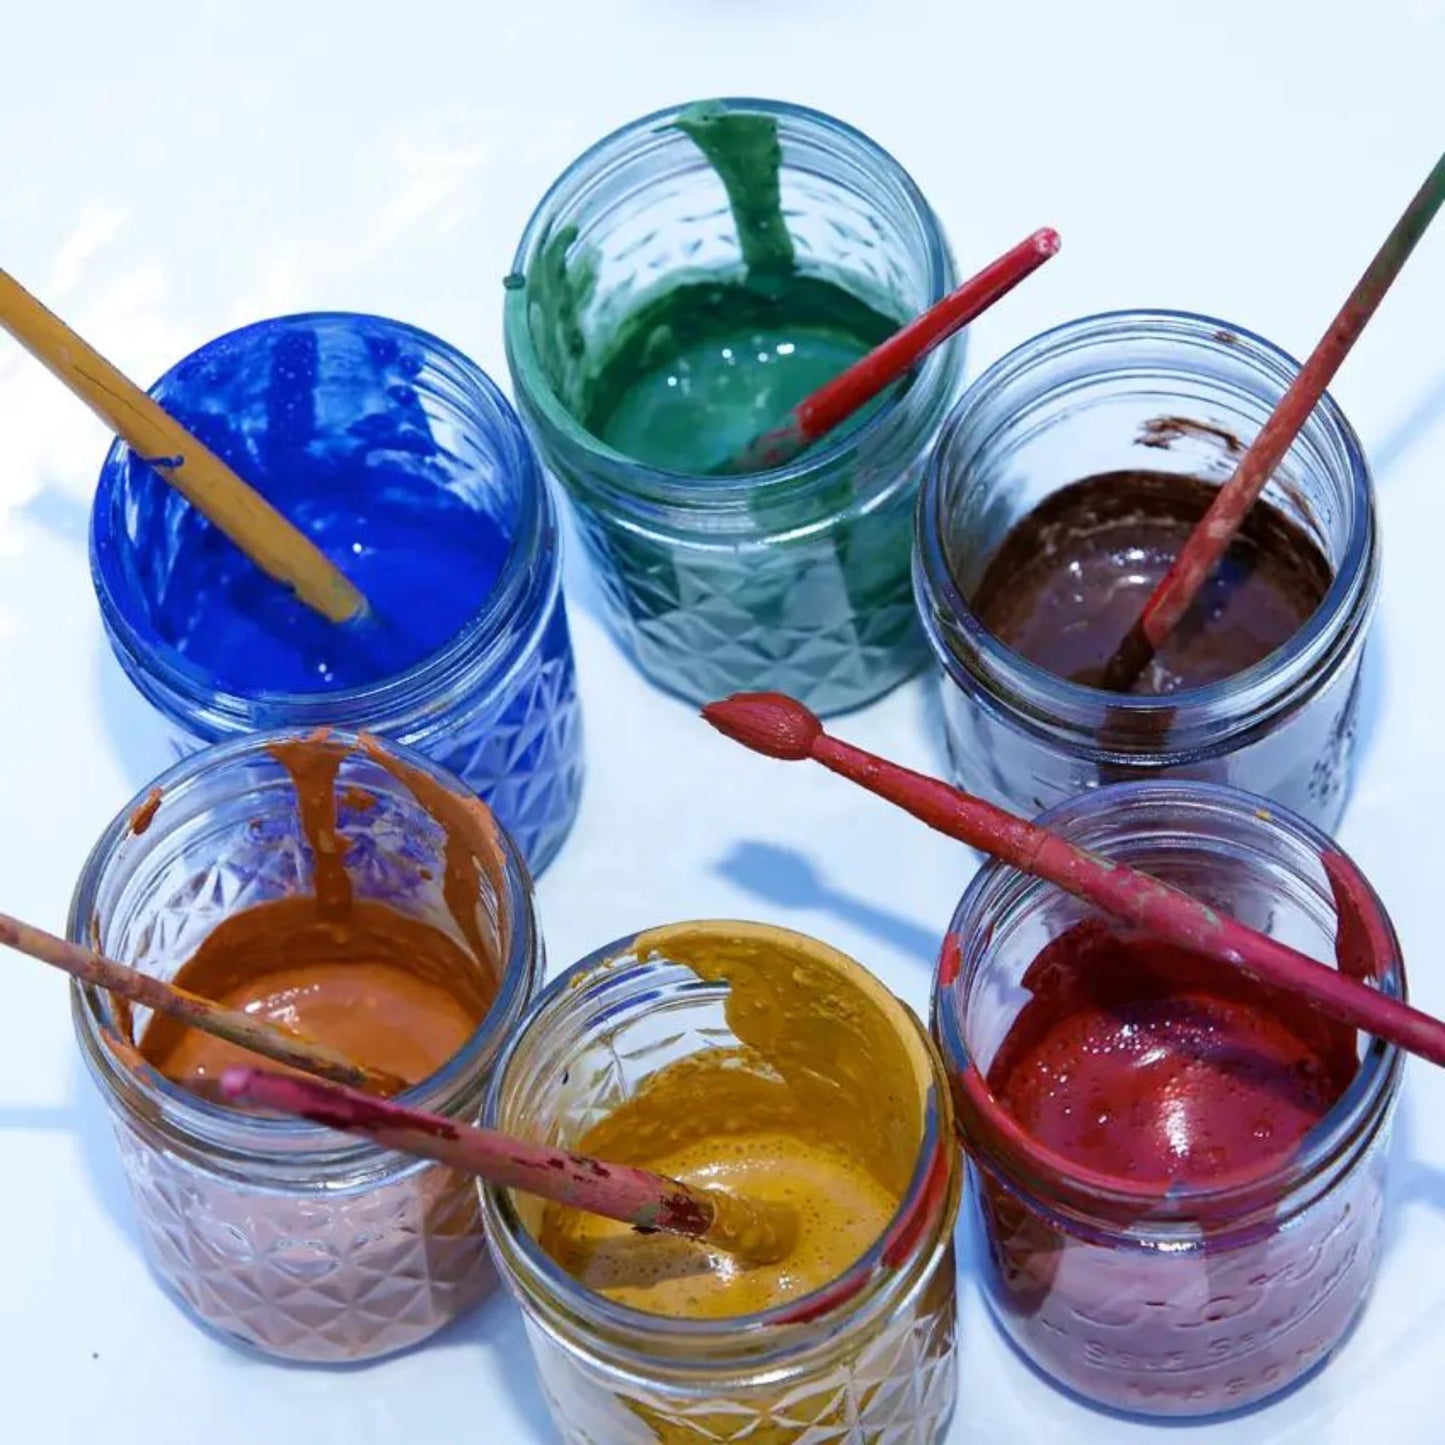 Natural Earth Paint Kit - Mix Your Own Nontoxic Paint for Kids - Alder & Alouette